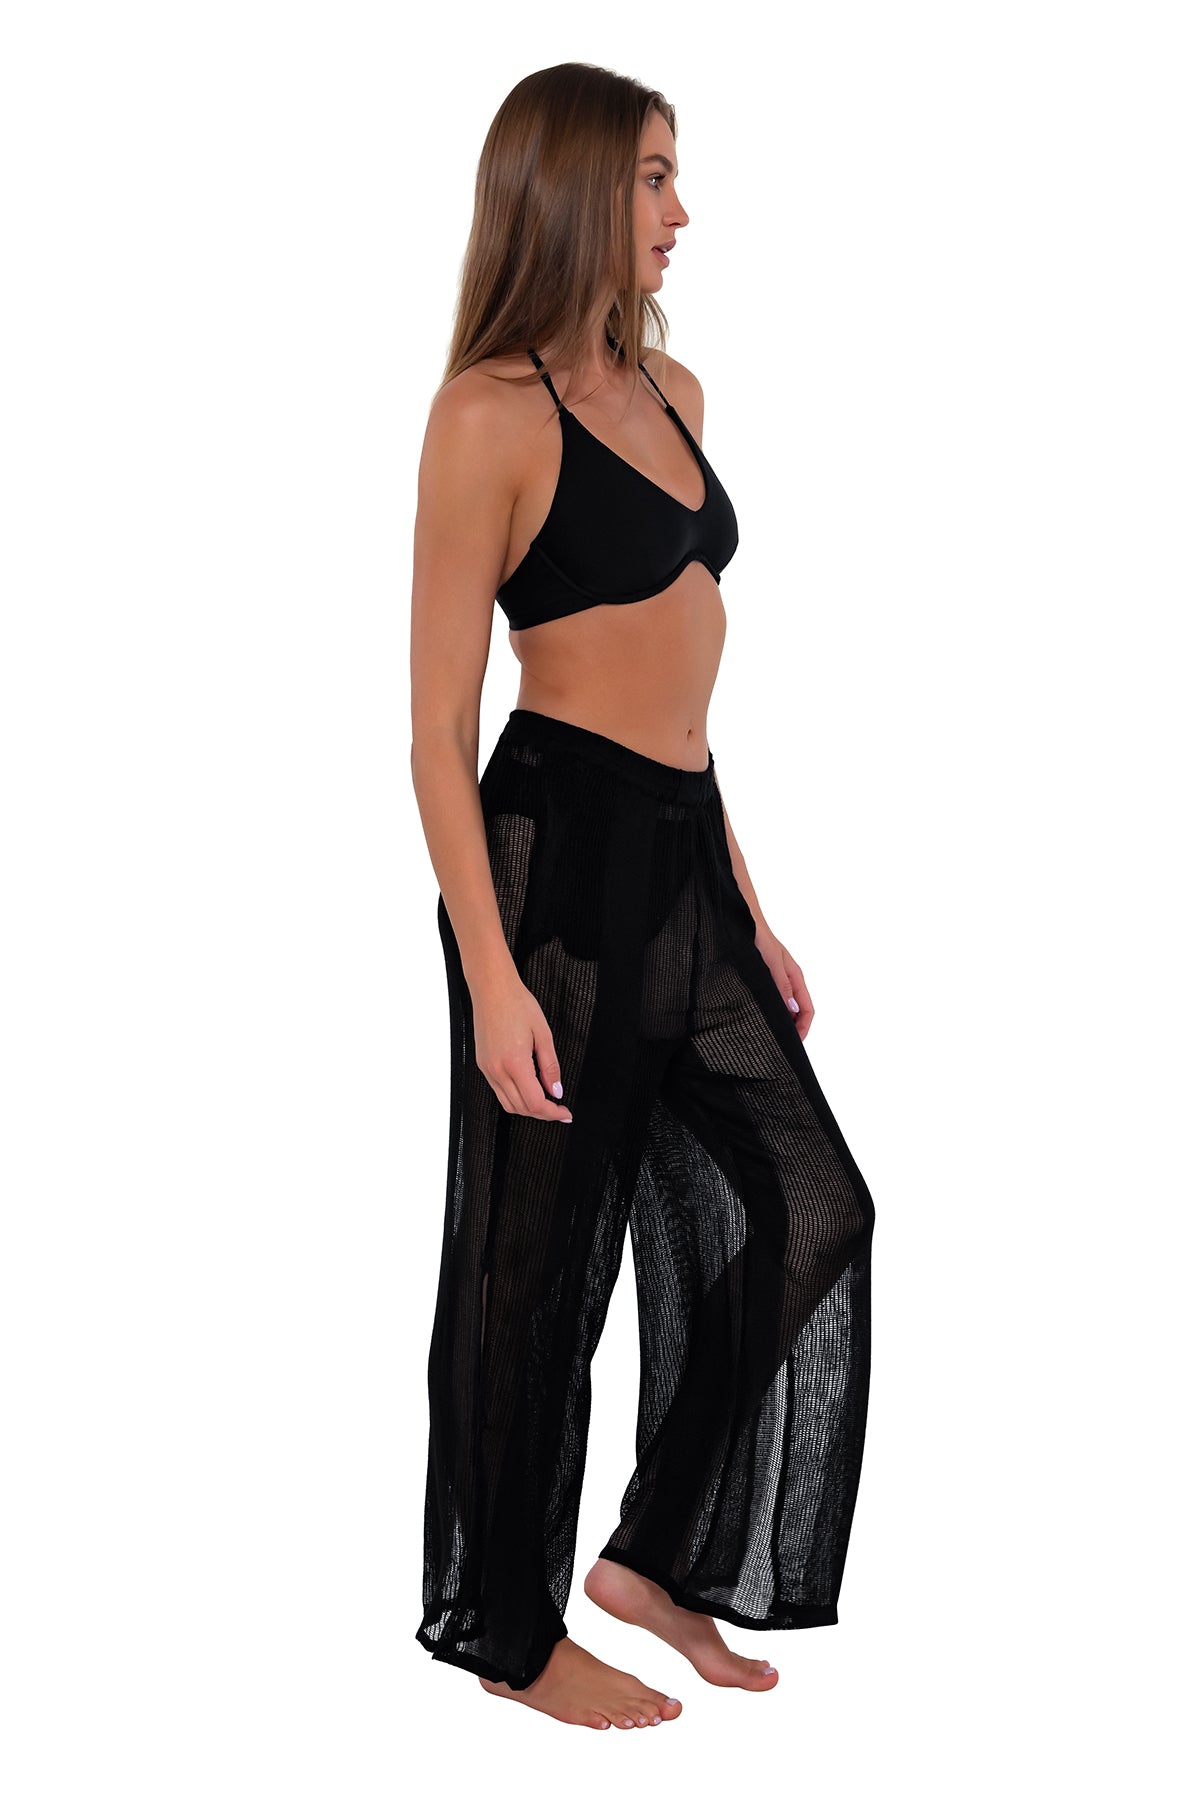 Side pose #1 of Daria wearing Sunsets Black Breezy Beach Pant with matching Brooke U-Wire bikini top